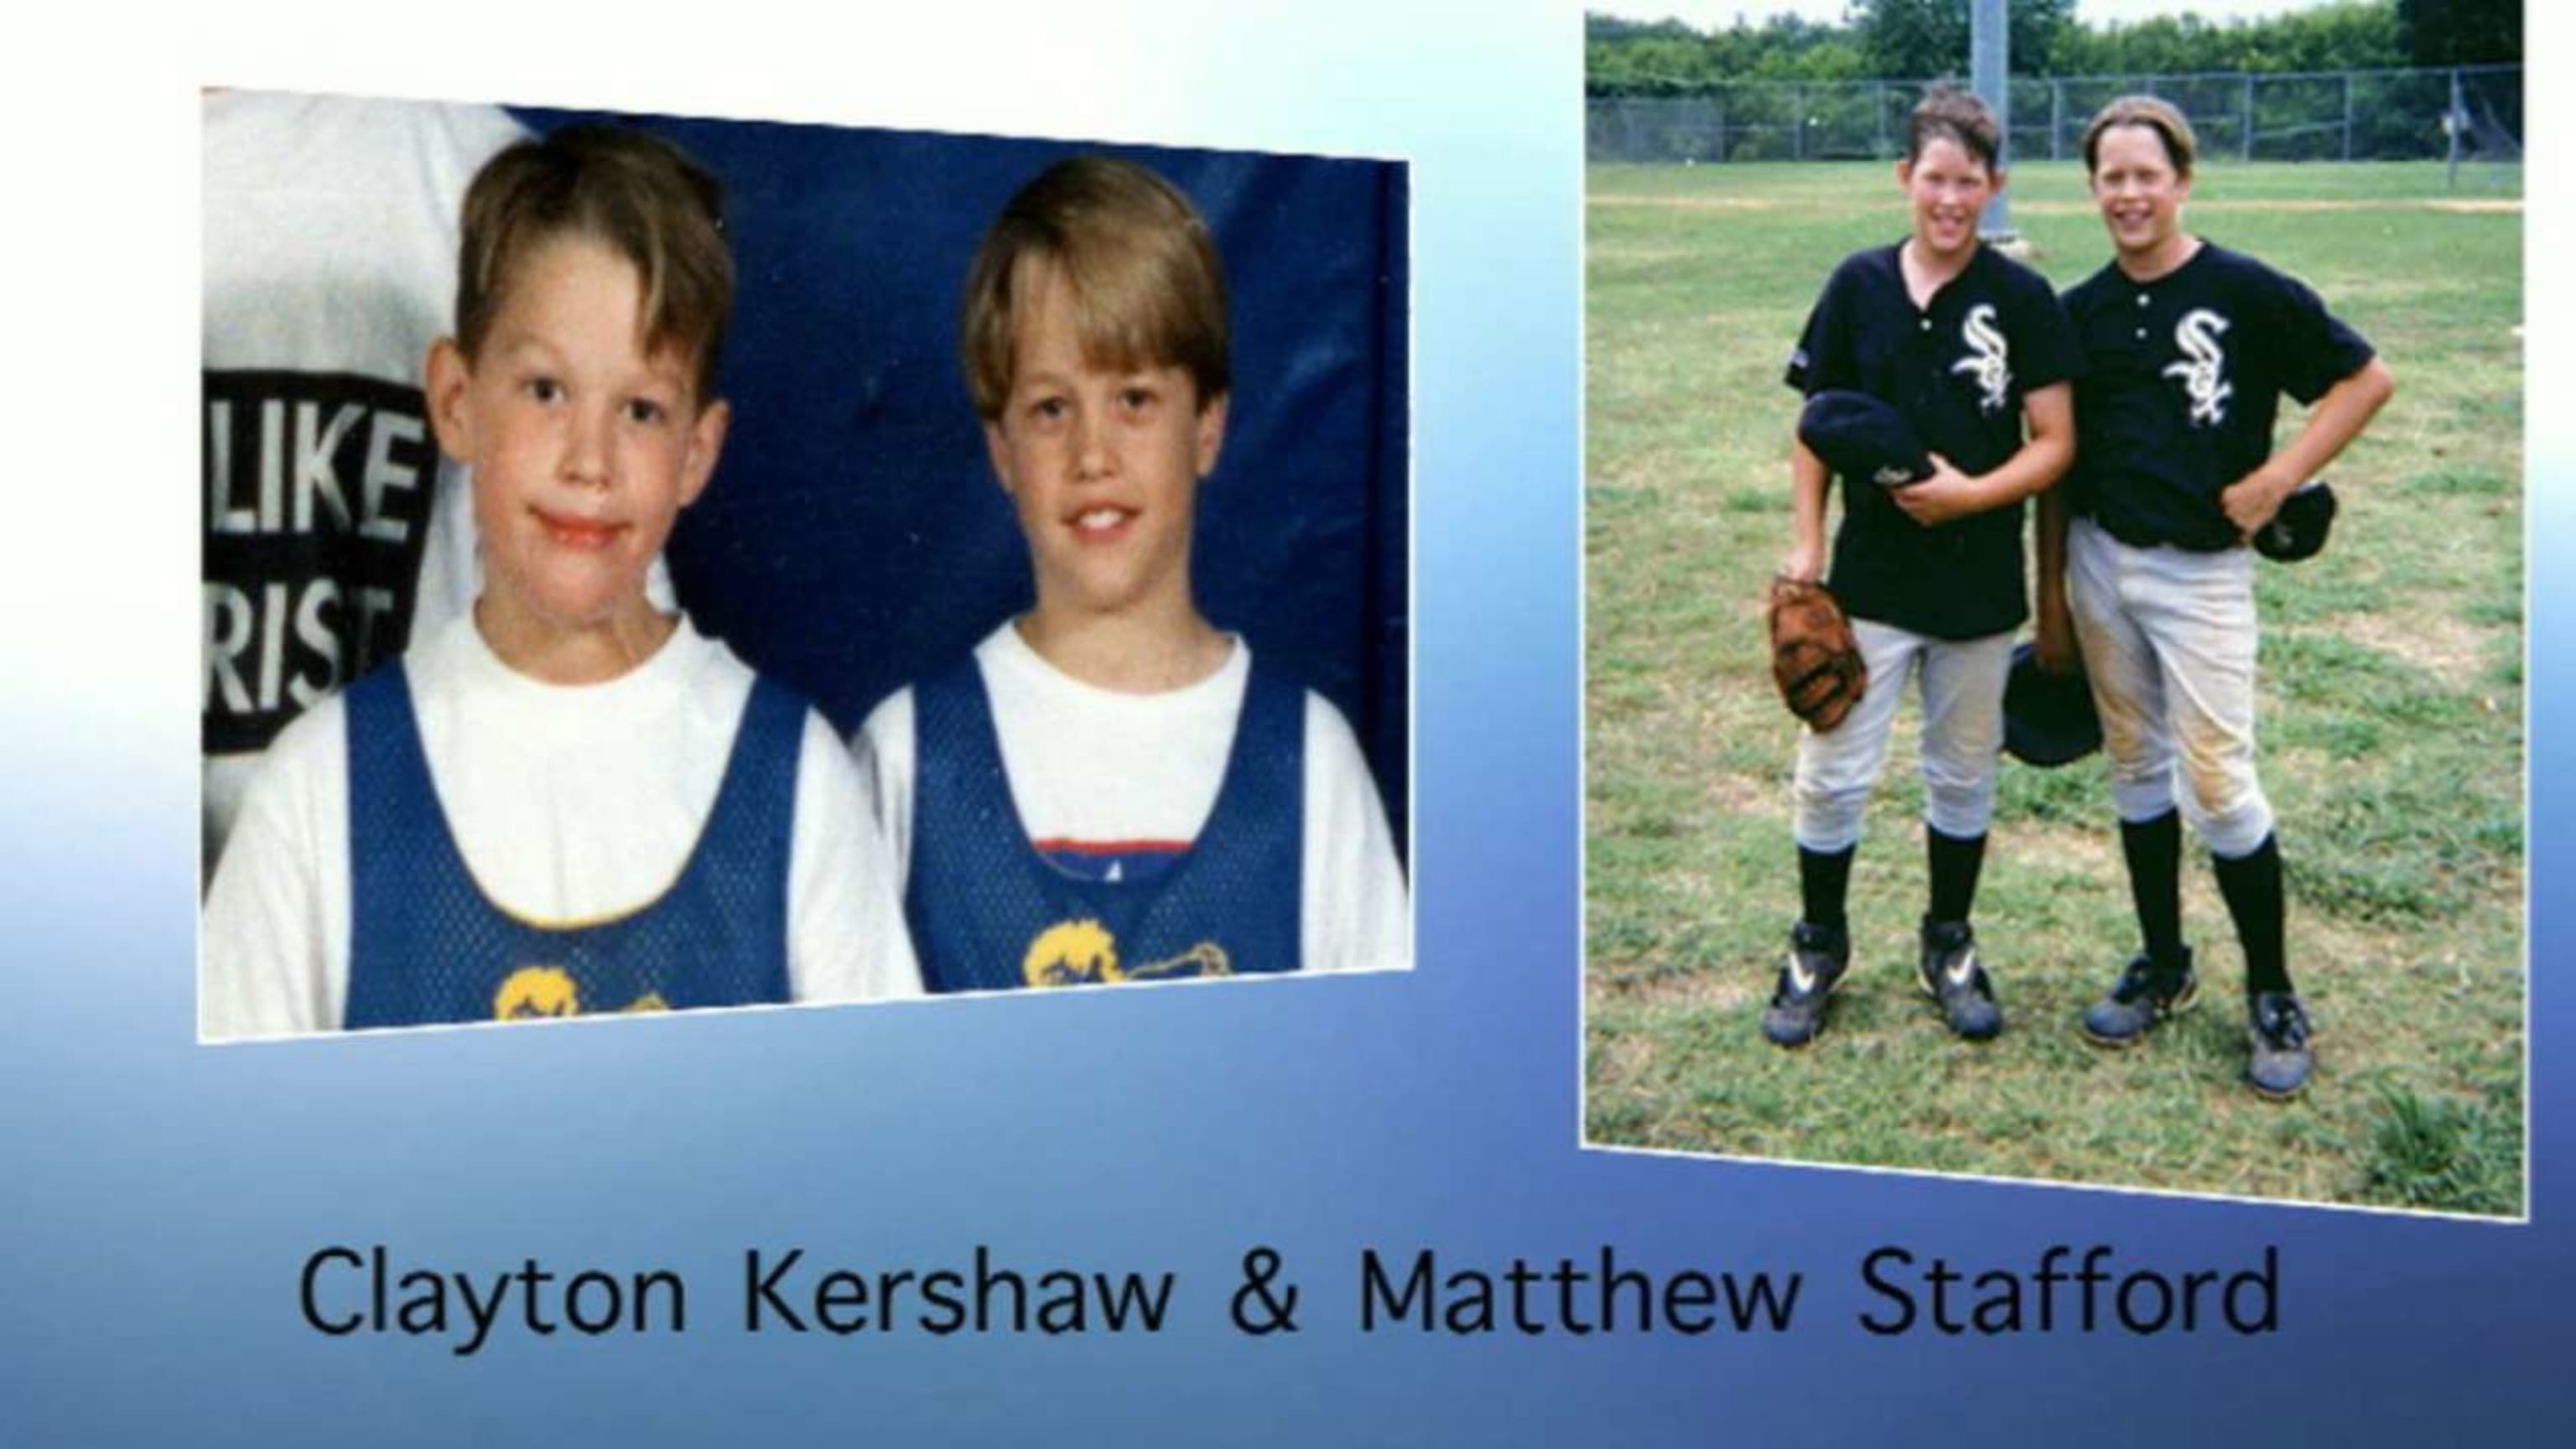 Clayton Kershaw and Matthew Stafford: The Wonder Years